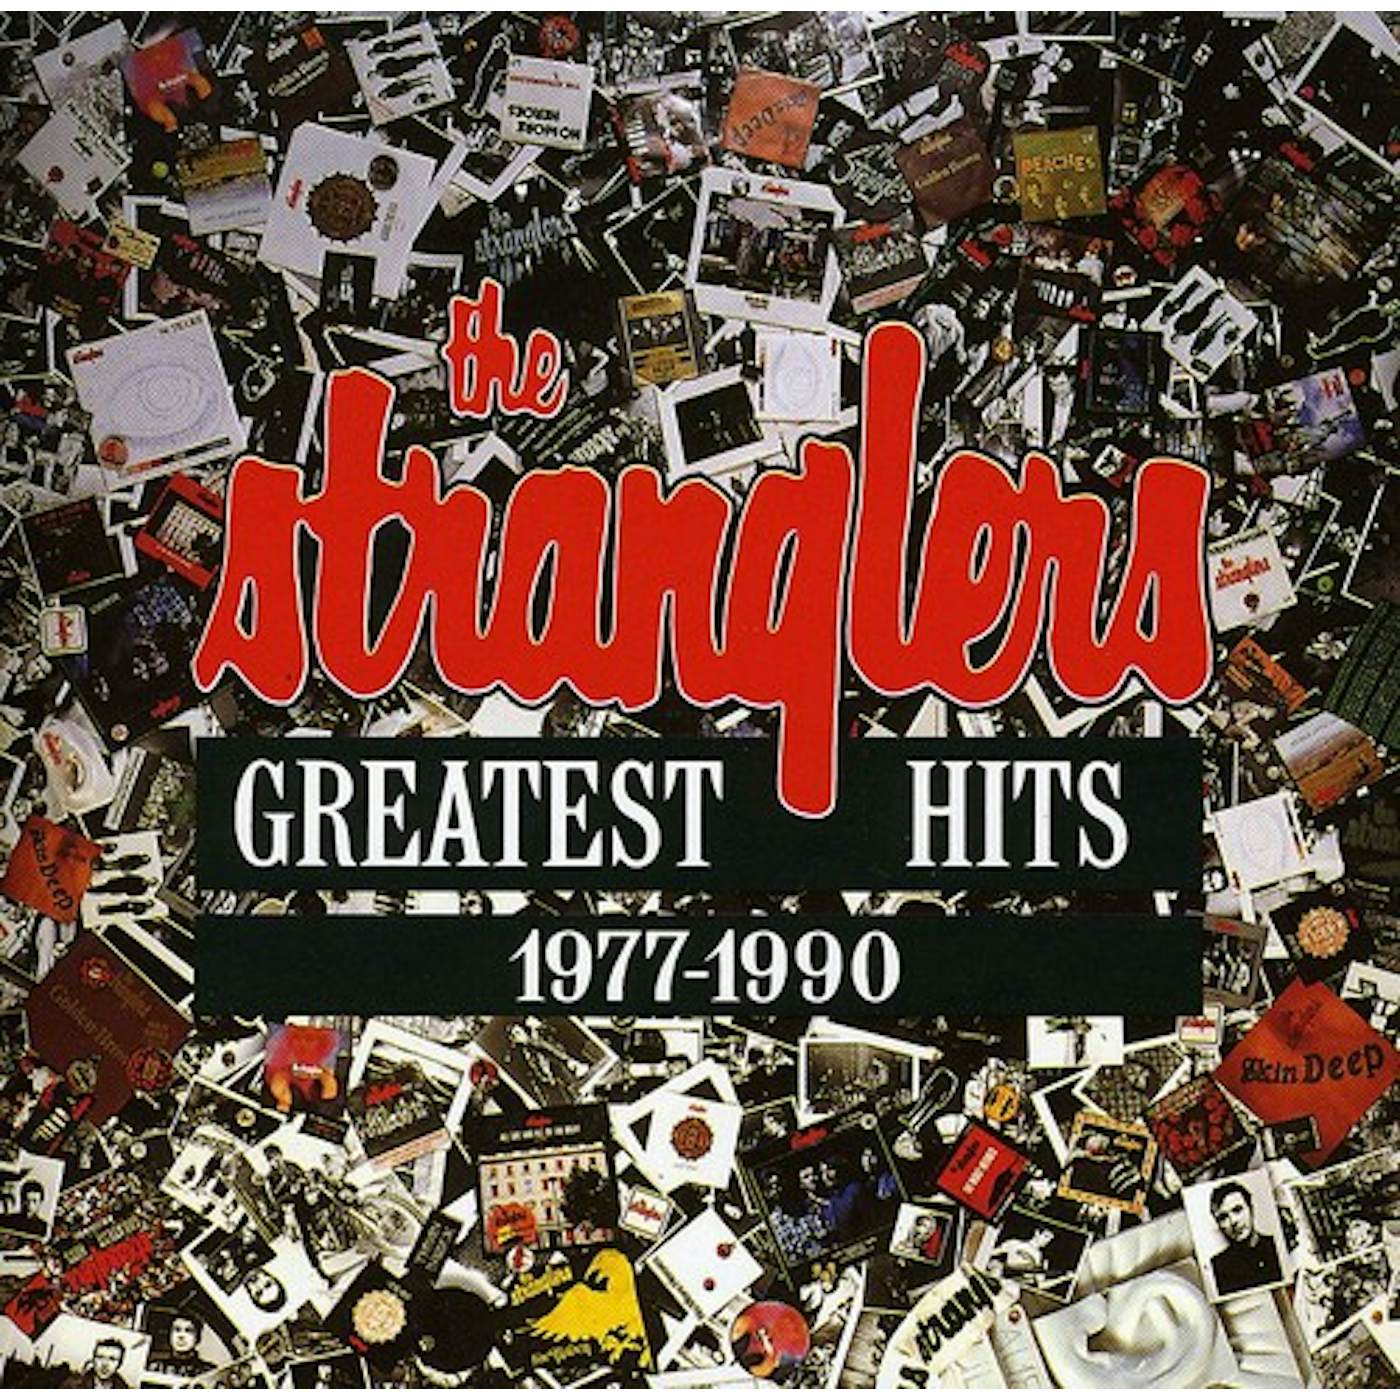 The Stranglers GREATEST HITS 1997-1990 CD